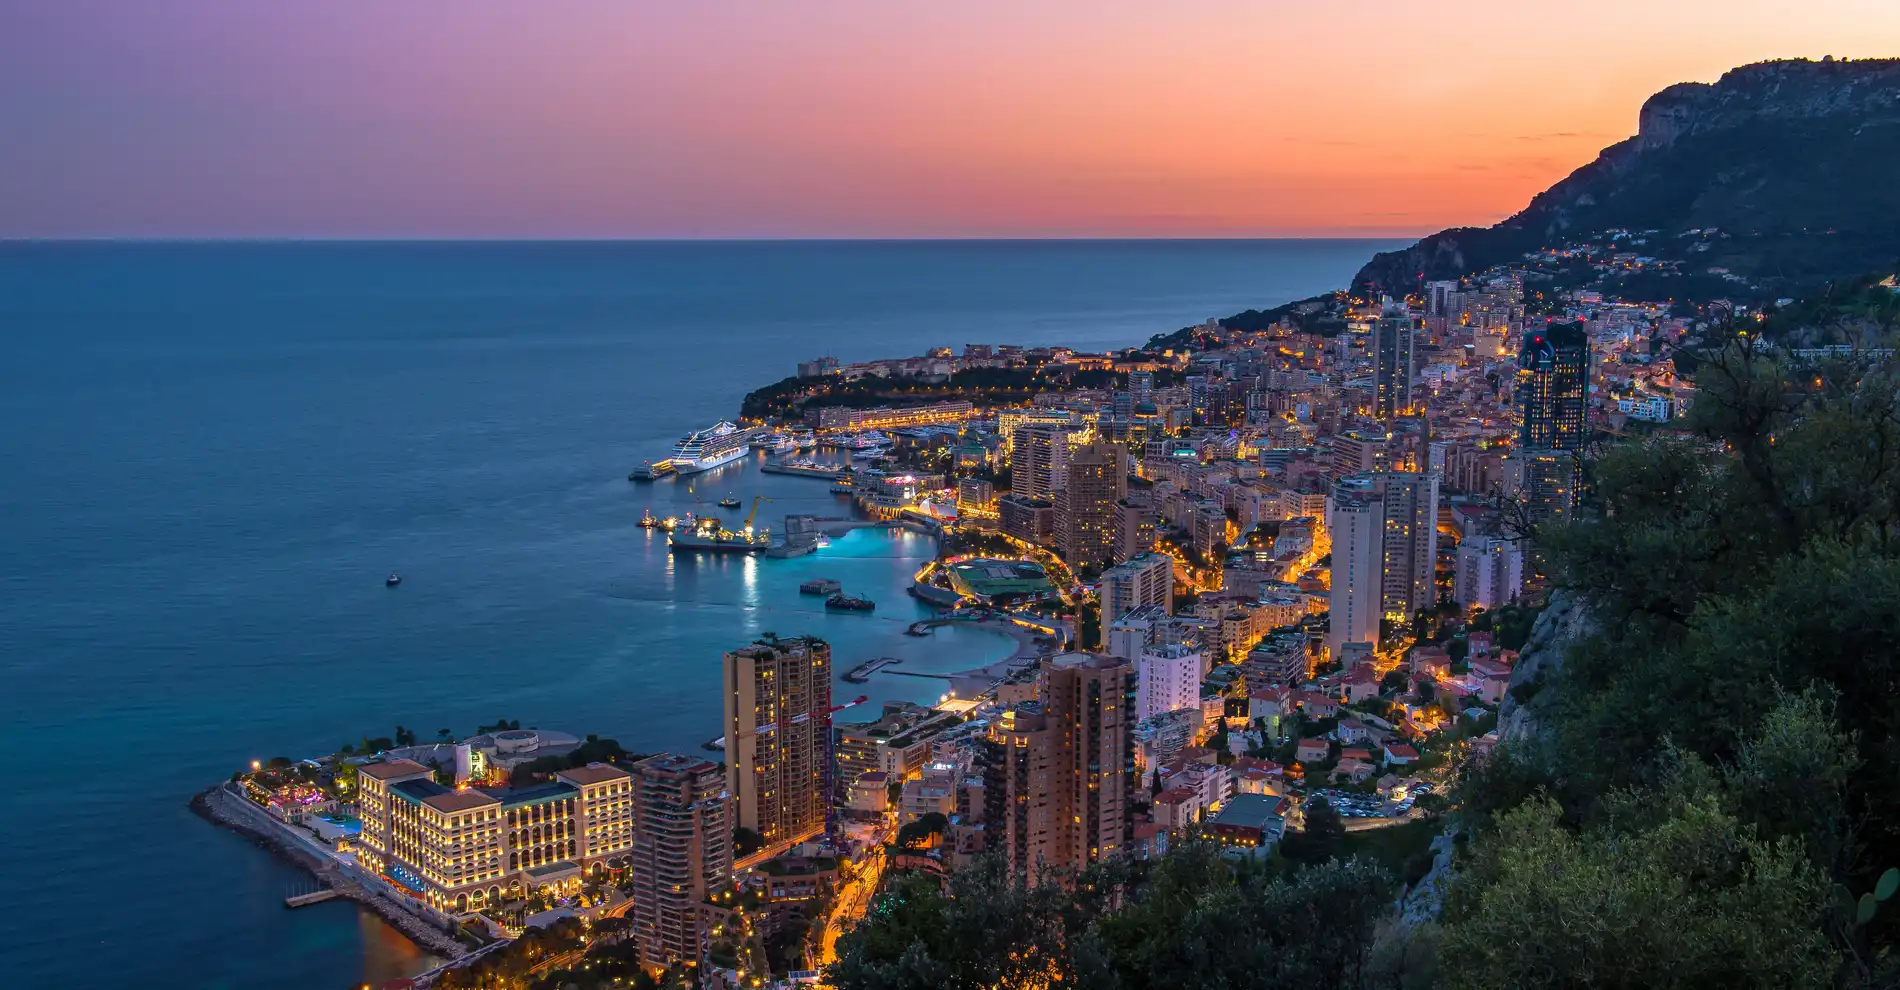 Sunset in Monaco - Tête de chien